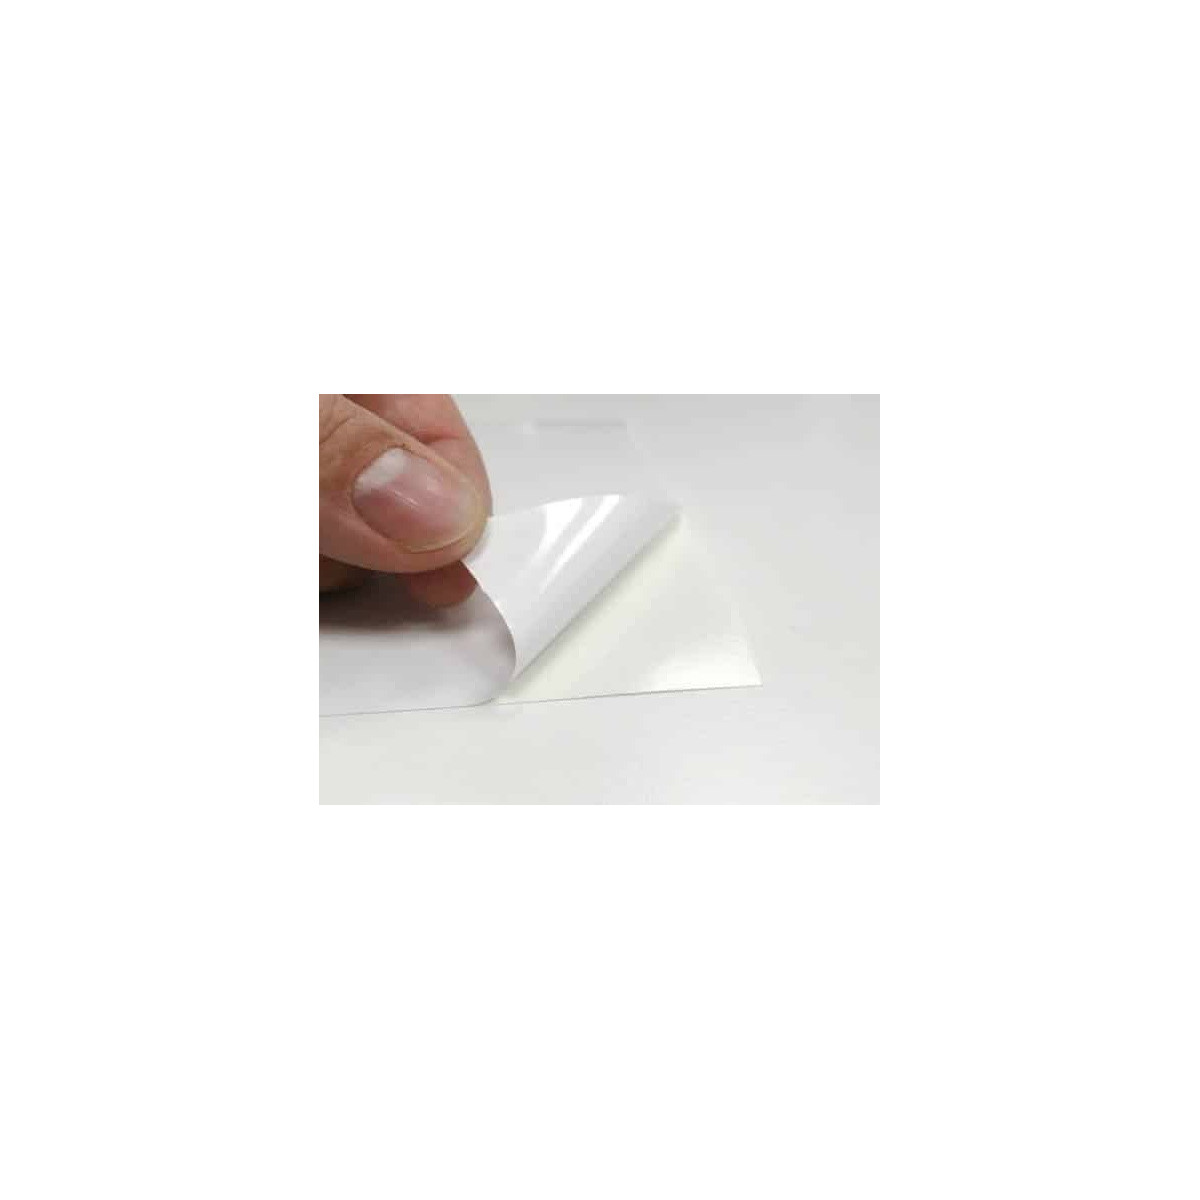 Tableau blanc adhésif Velleda effaçable à sec - Scrapmalin